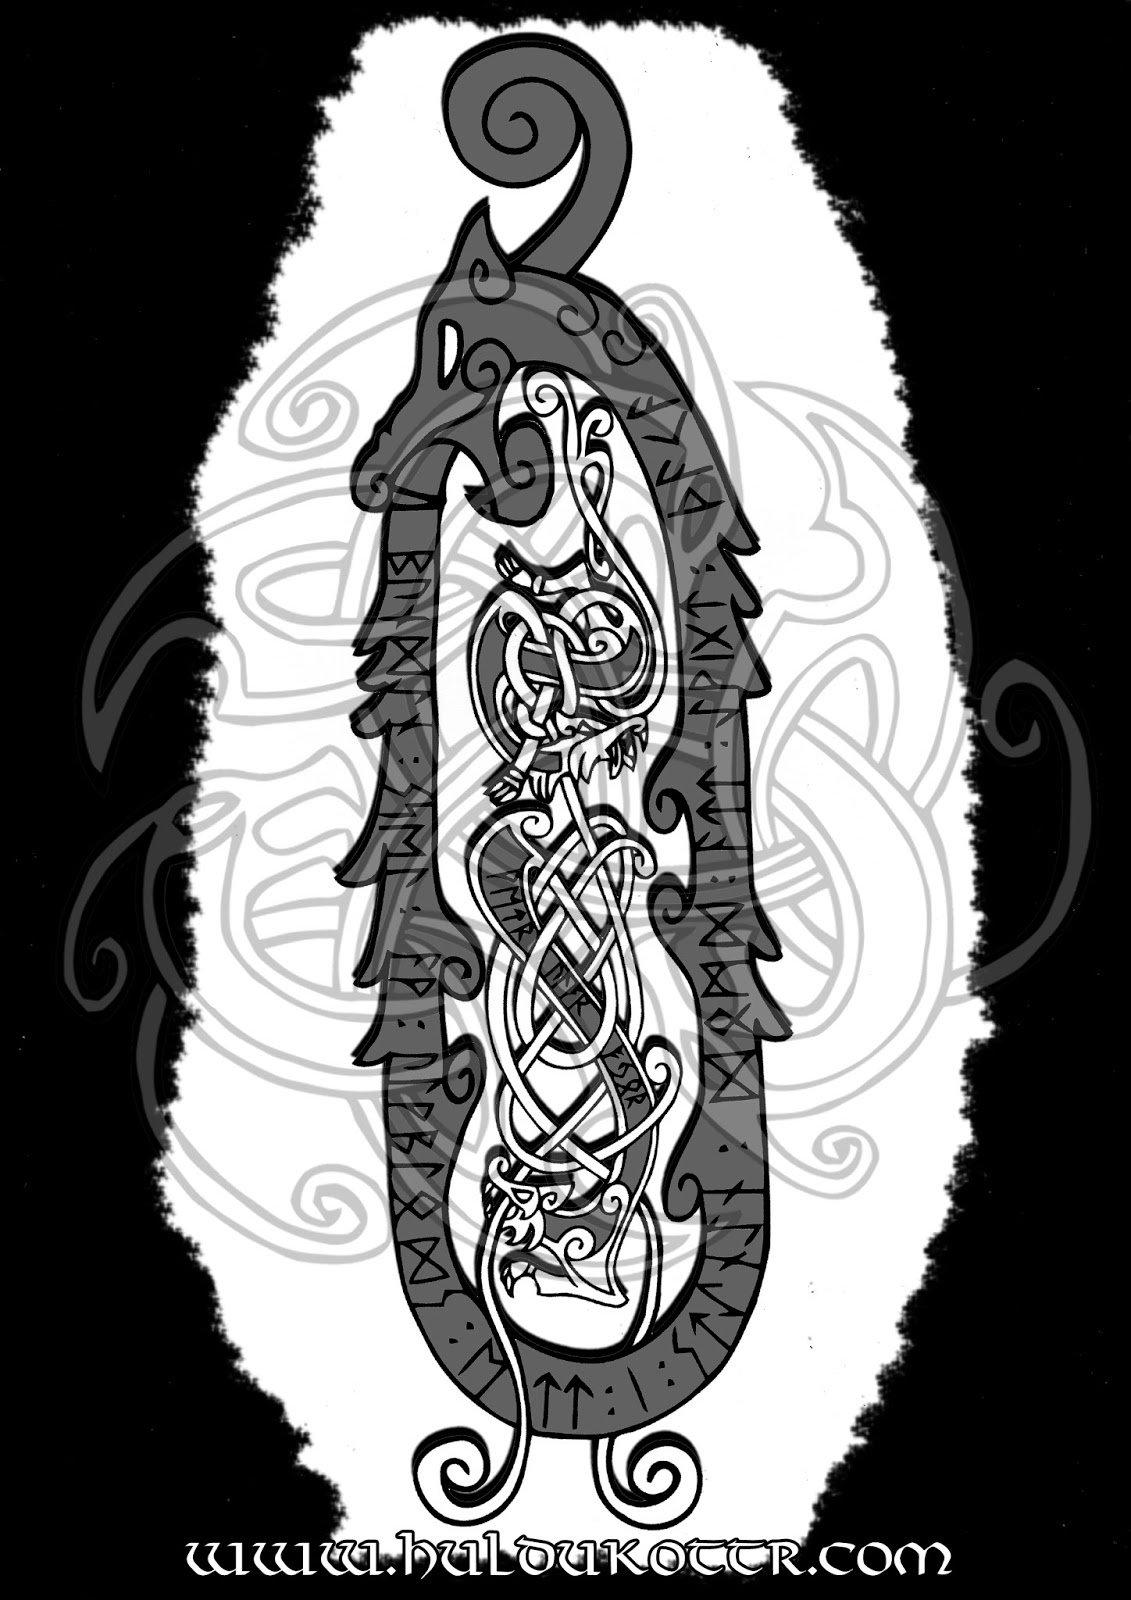 HULDUKÖTTR - Norse and Germanic Art: Another tattoo design